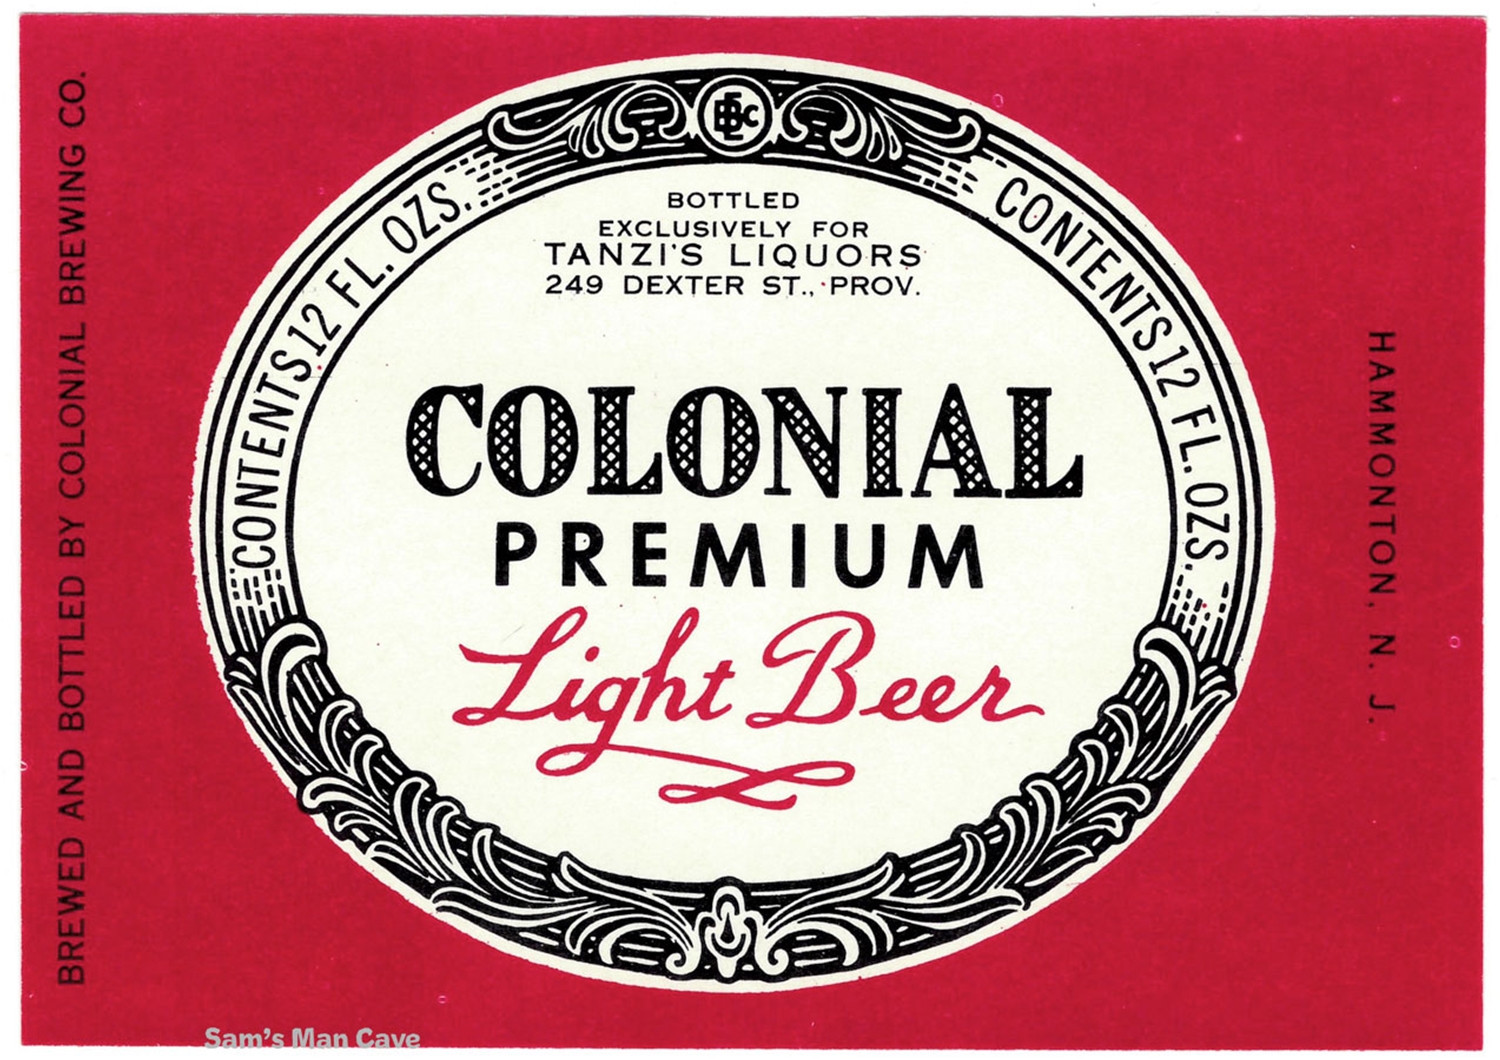 Colonial Premium Light Beer Label